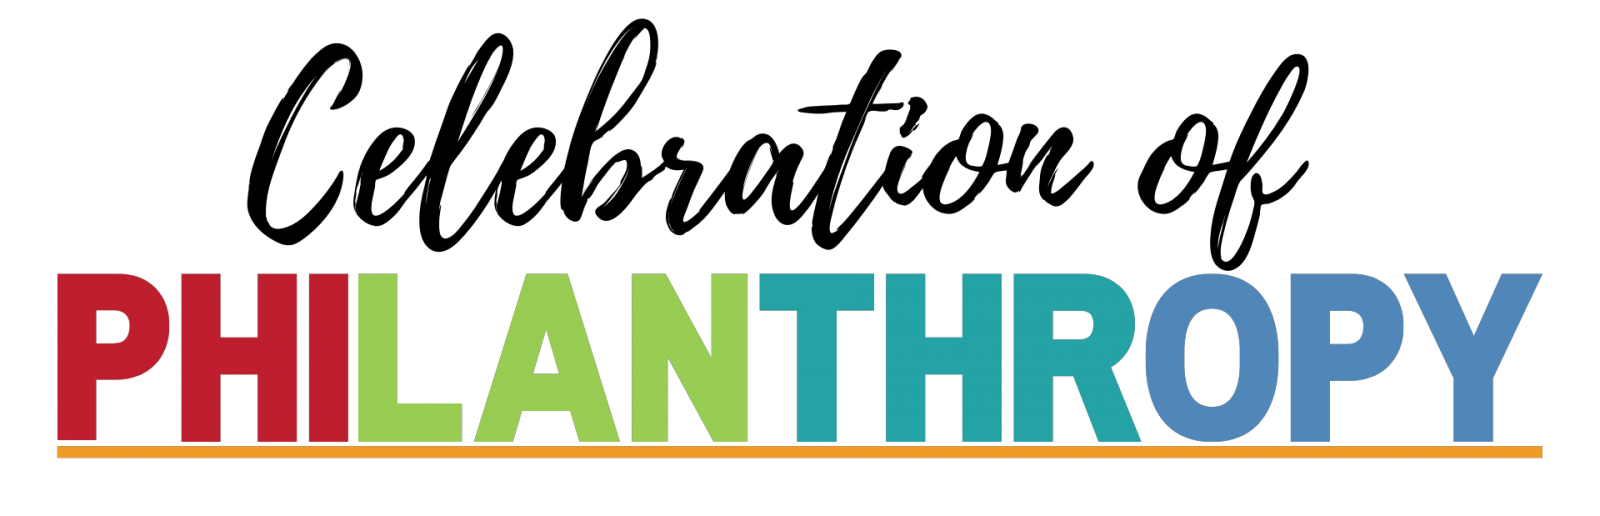 Celebration of Philanthropy Logo